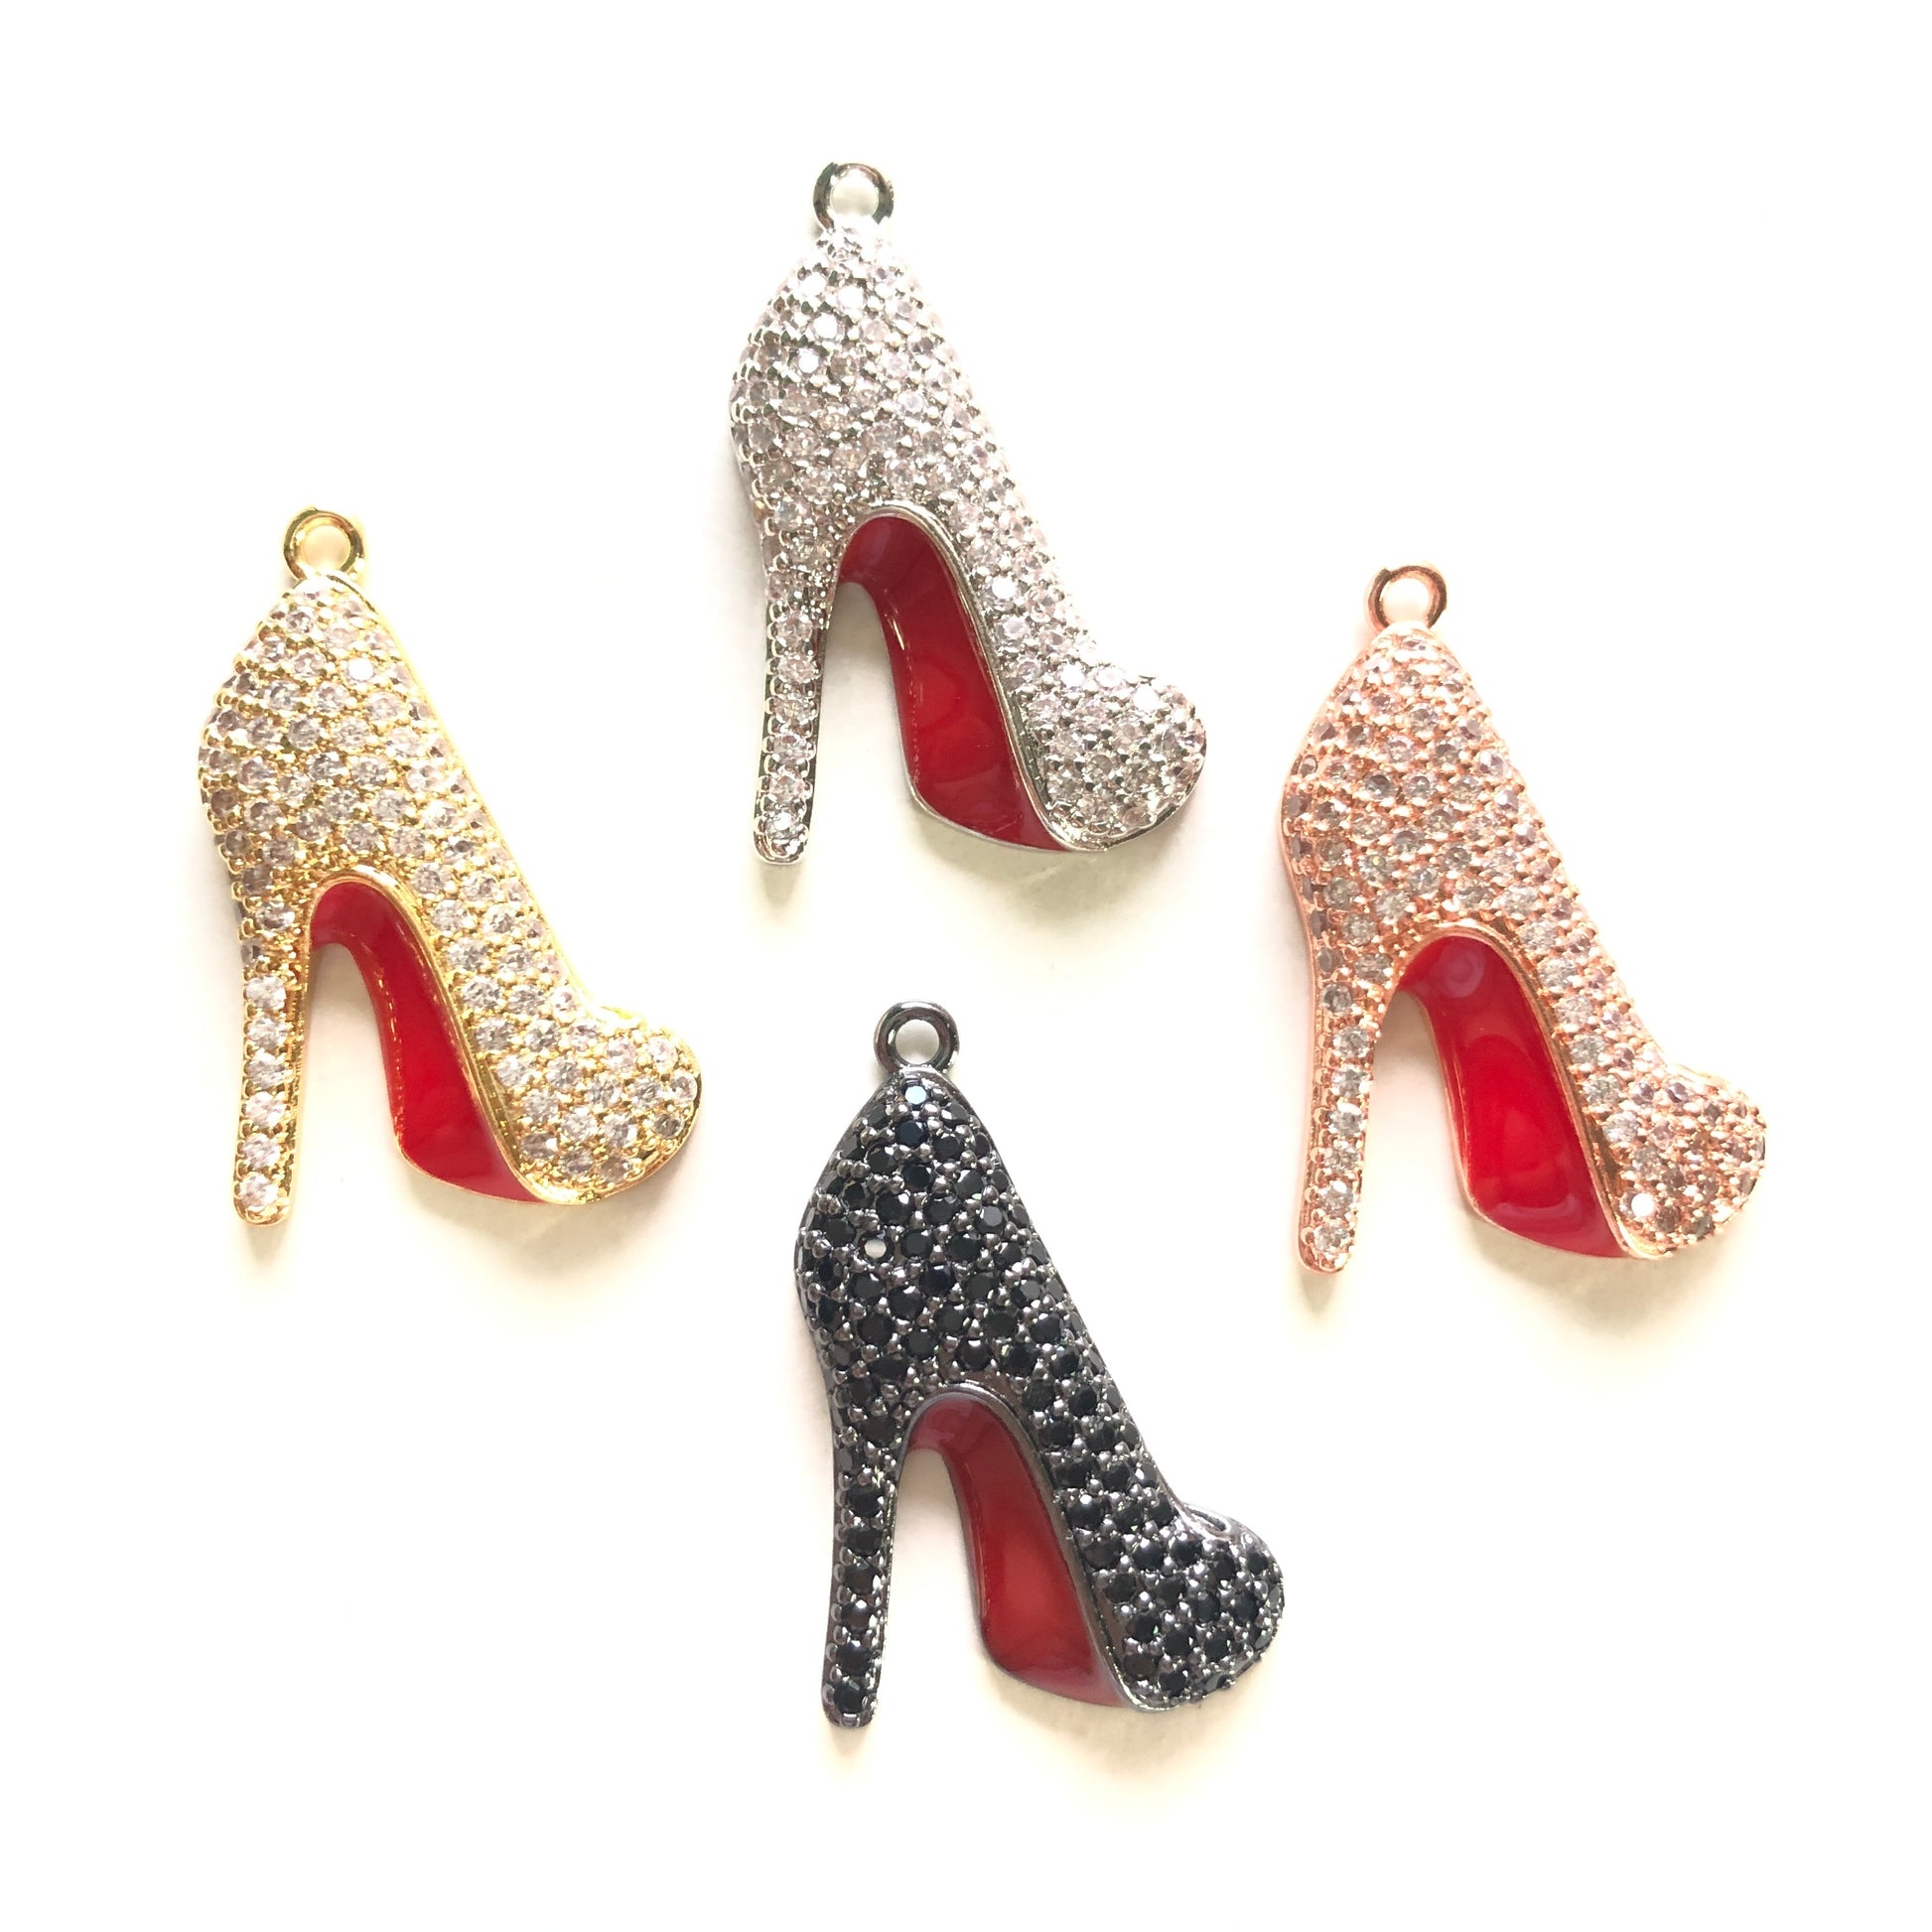 10pcs/lot 30.3*22.5mm CZ Paved Red Bottom High Heel Shoe Charms CZ Paved Charms High Heels Charms Beads Beyond